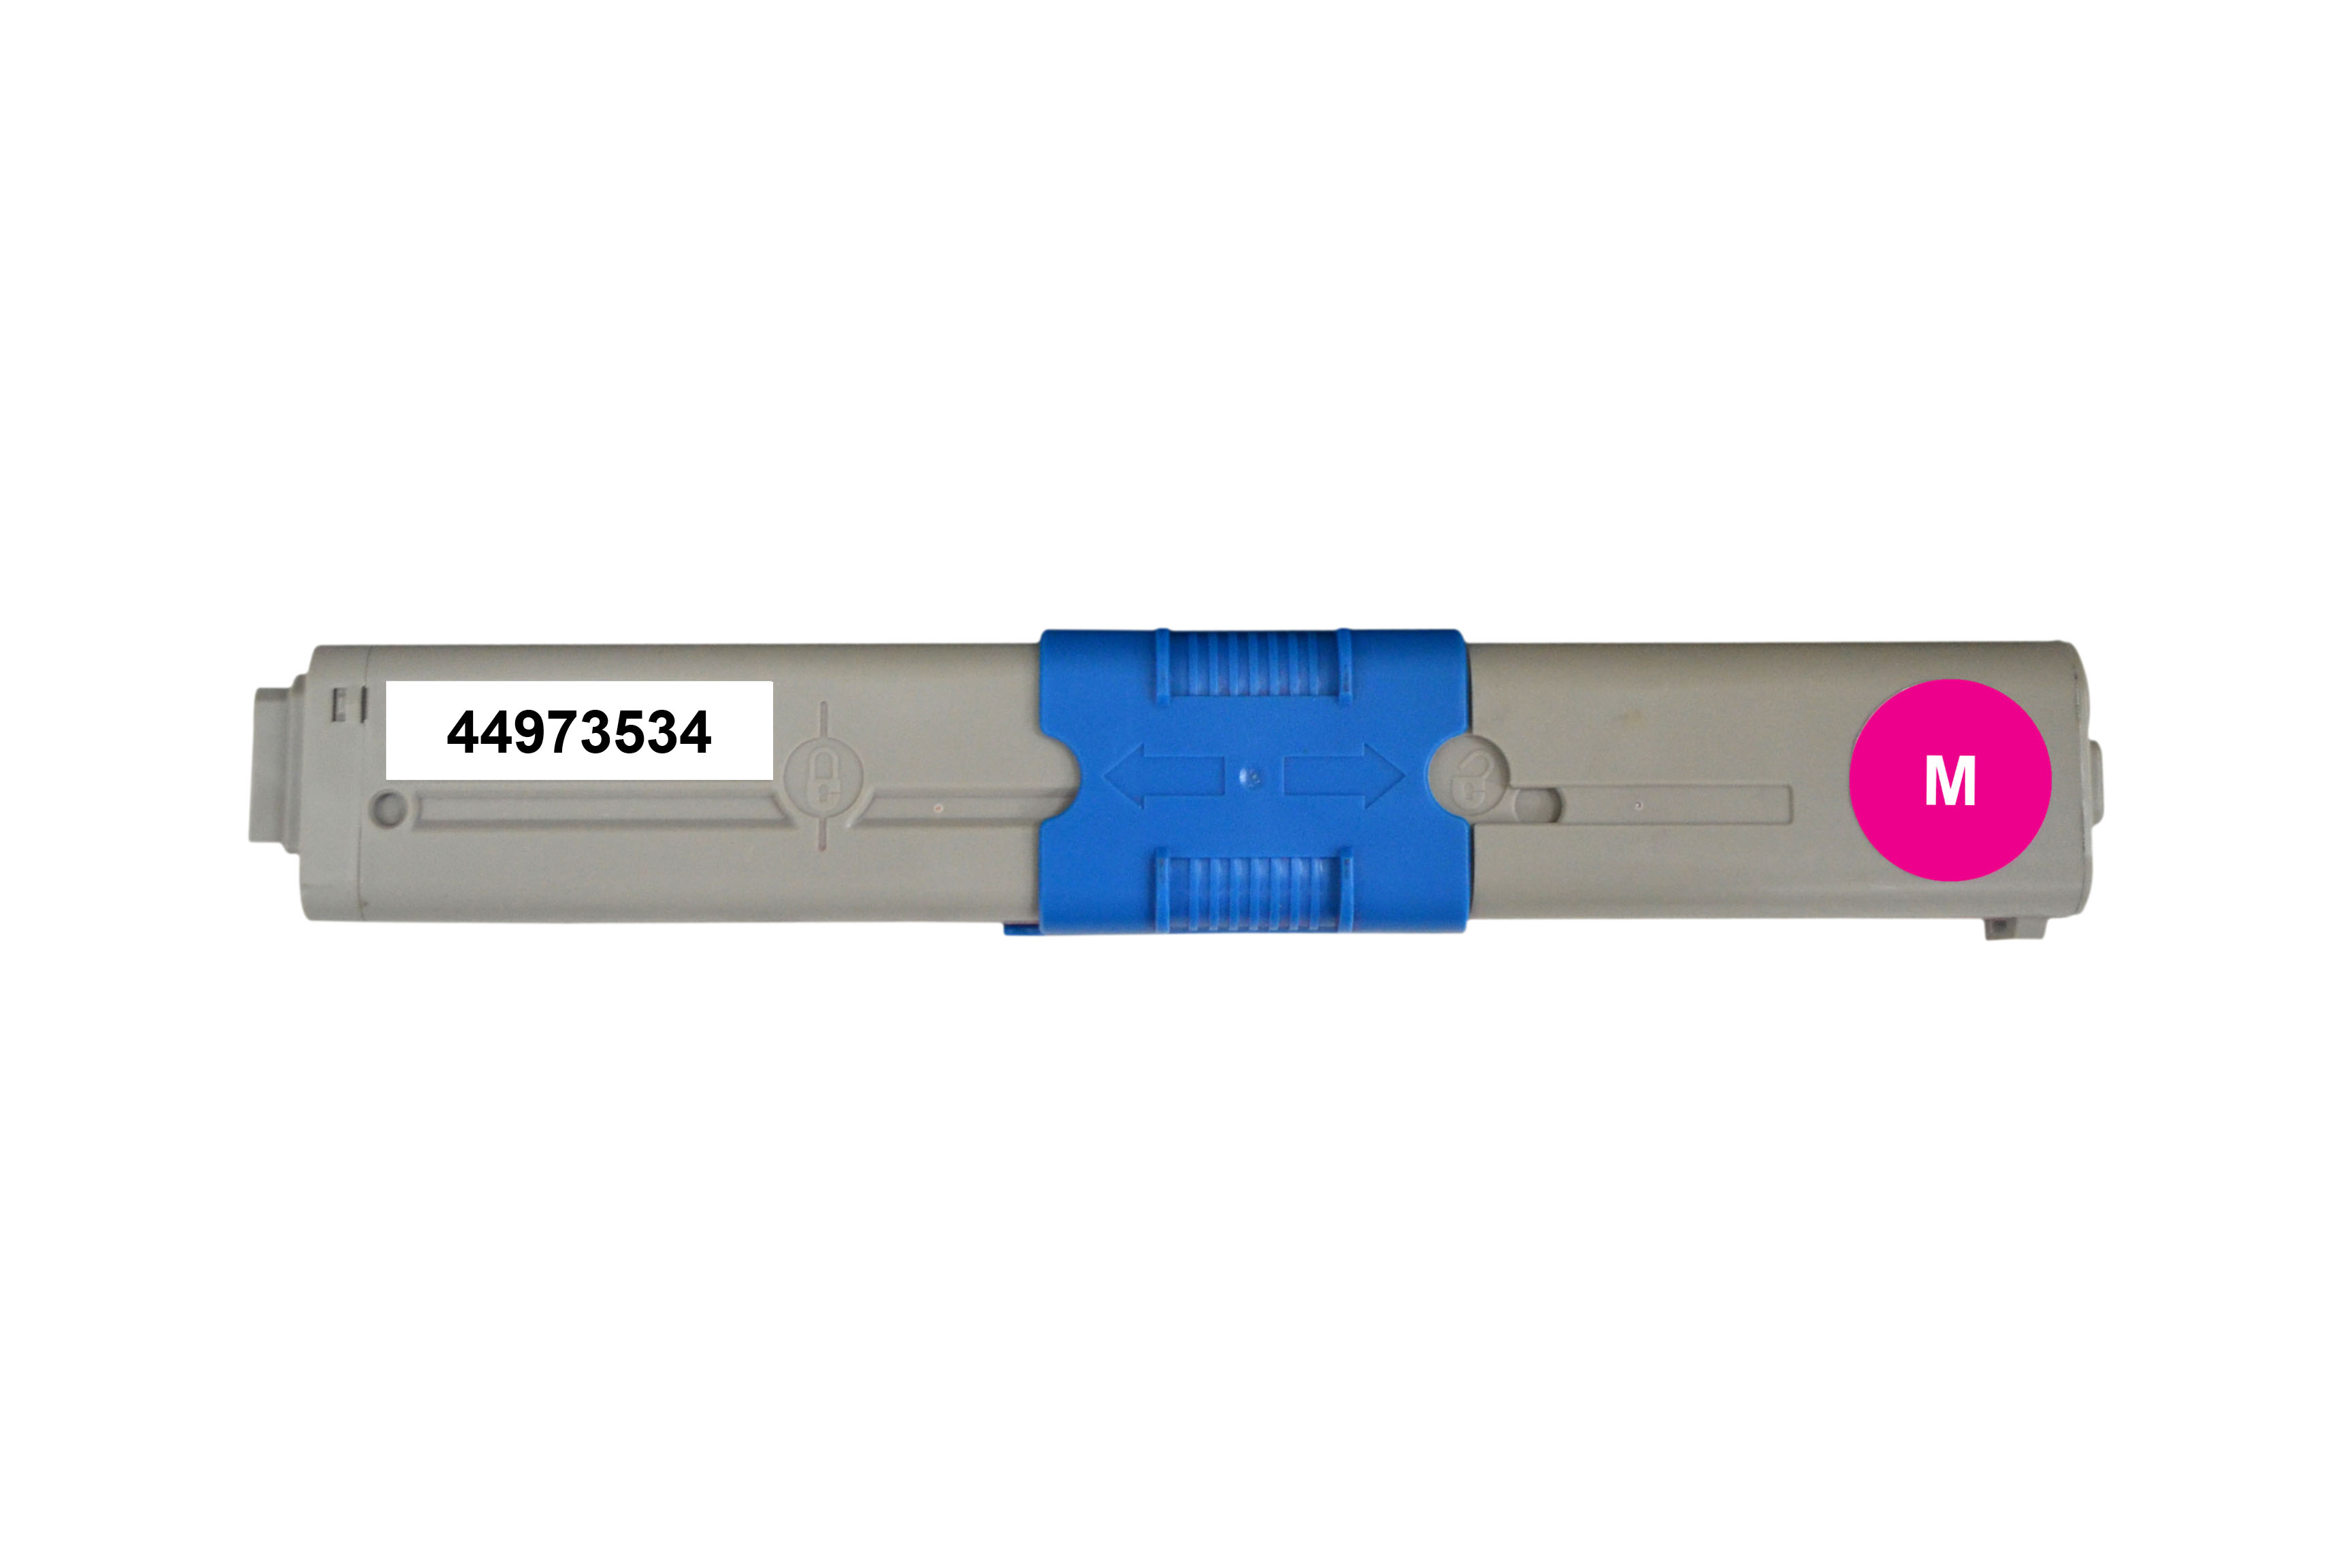 NewbuiltO301M, Newbuilt Toner kompatibel zu OKI C301 magenta (1.500 S.)